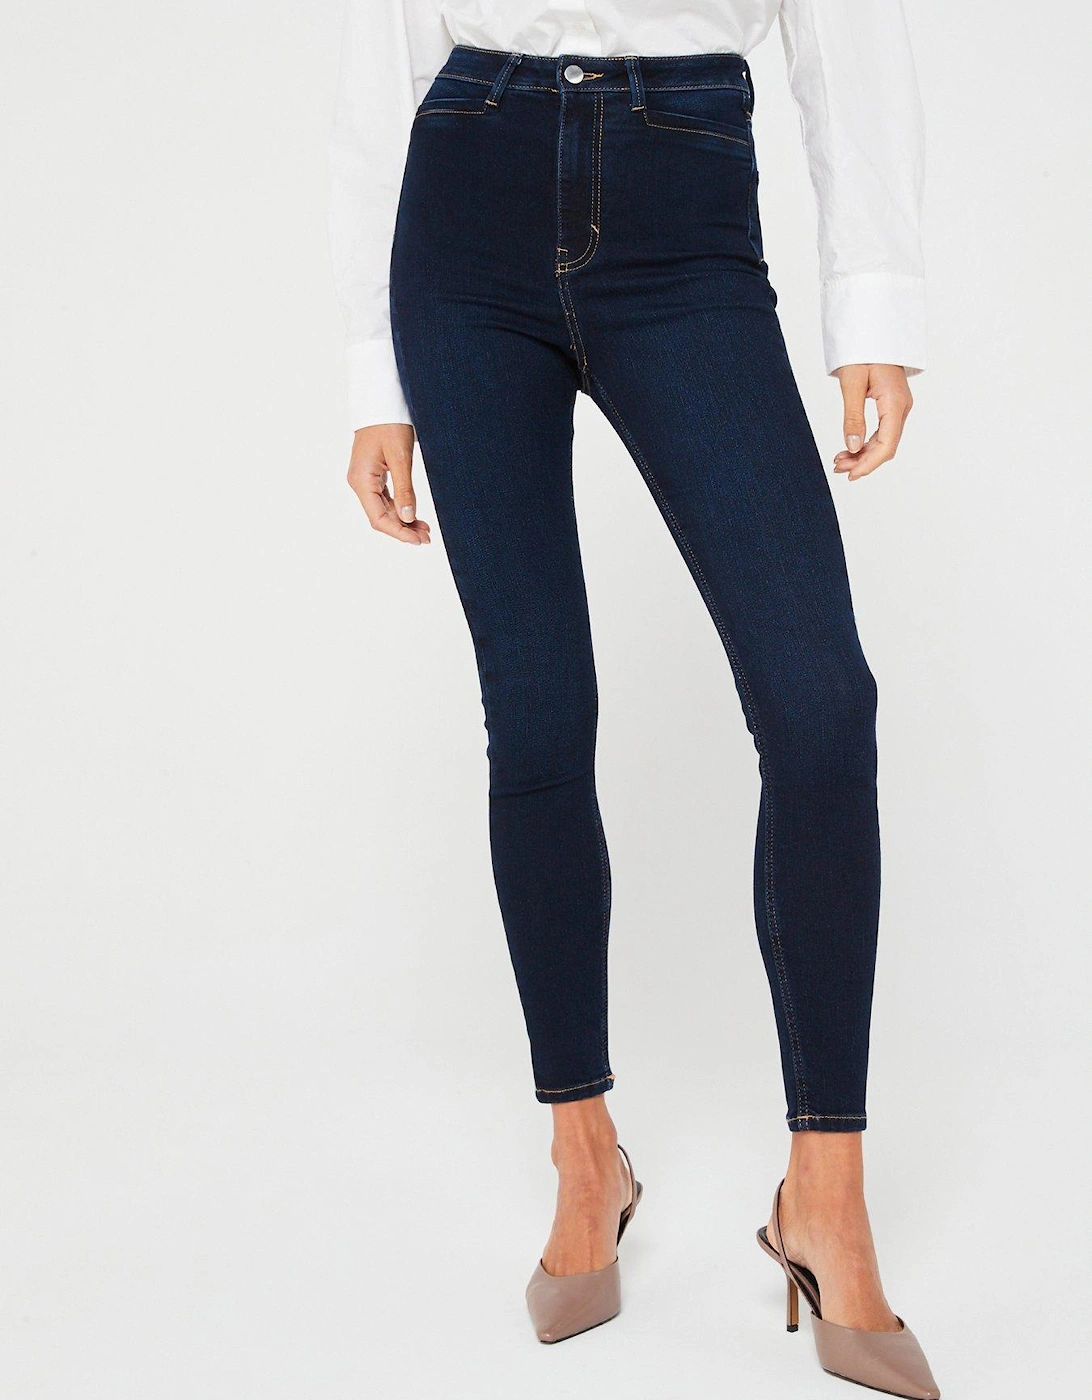 Addison Super High Waist Super Skinny Jeans - Dark Wash Blue, 7 of 6